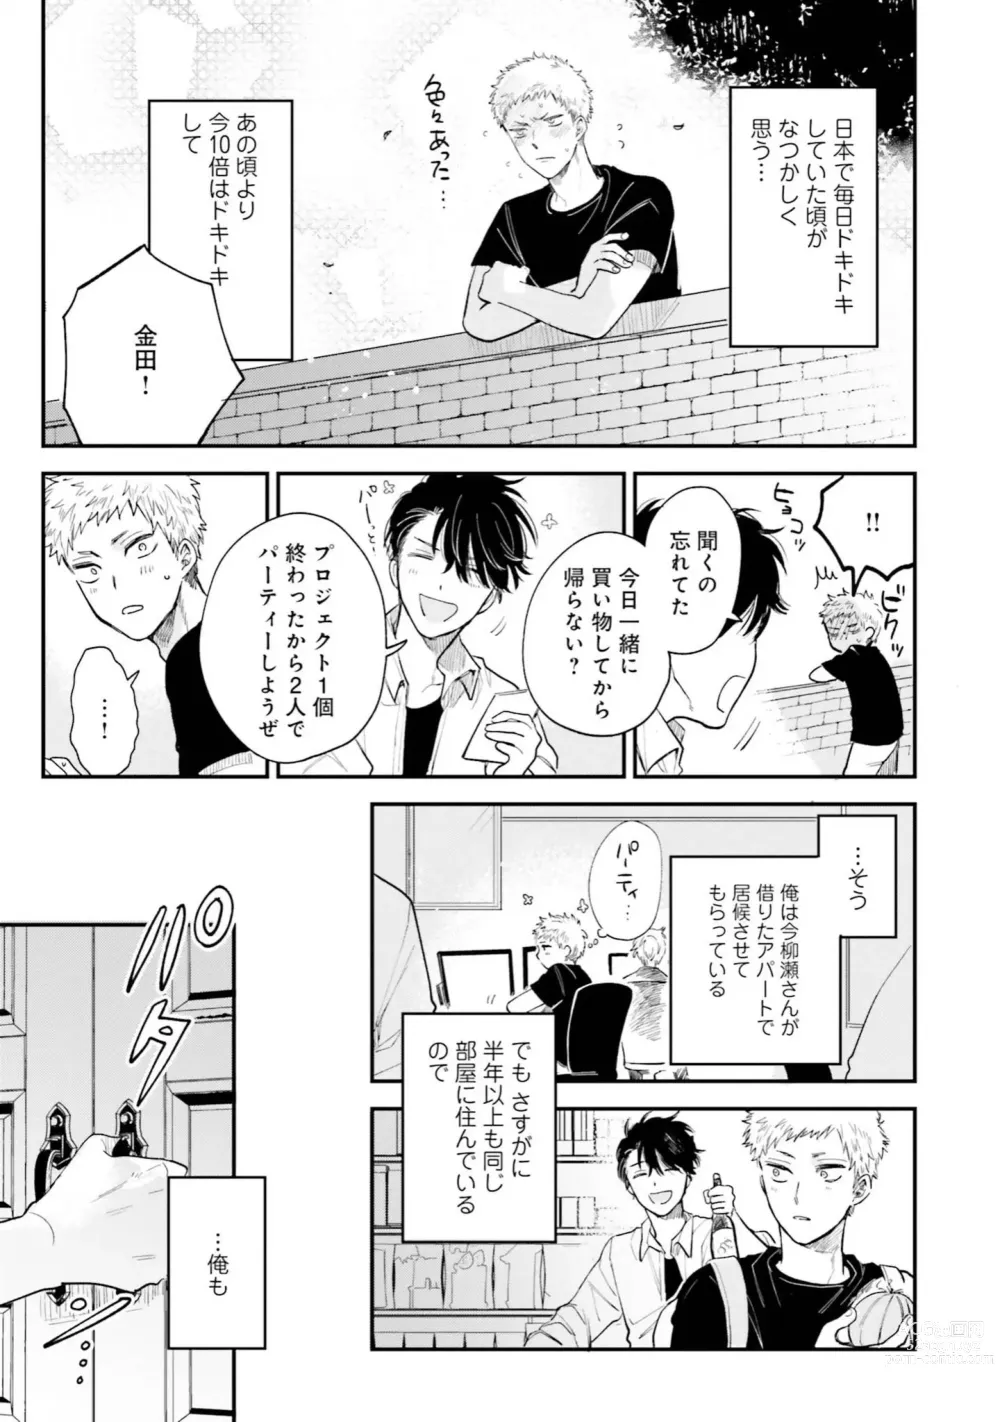 Page 11 of manga Senpai, Danjite Koi de wa! Brush Up